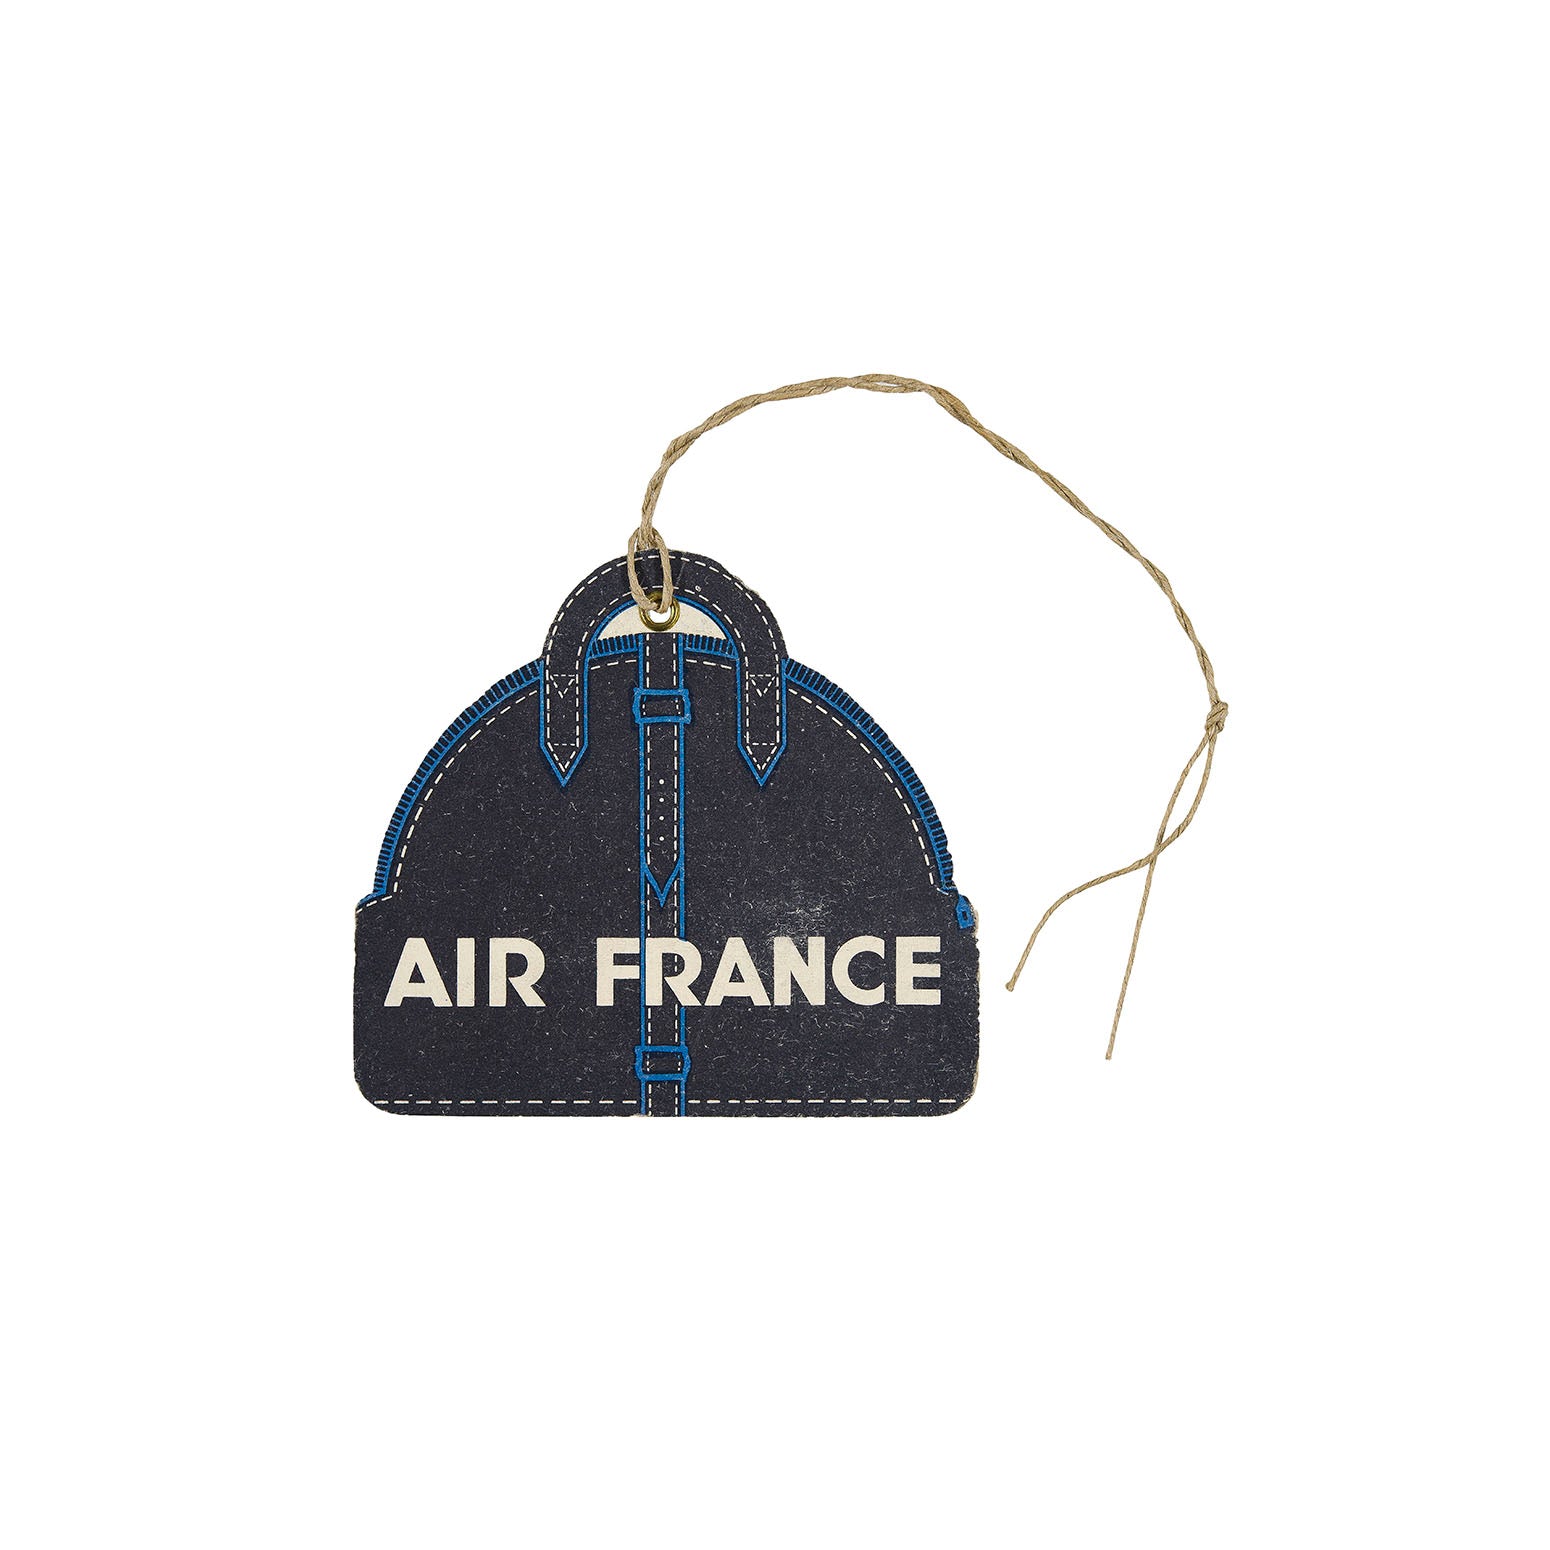 Air France Cabin Luggage tag